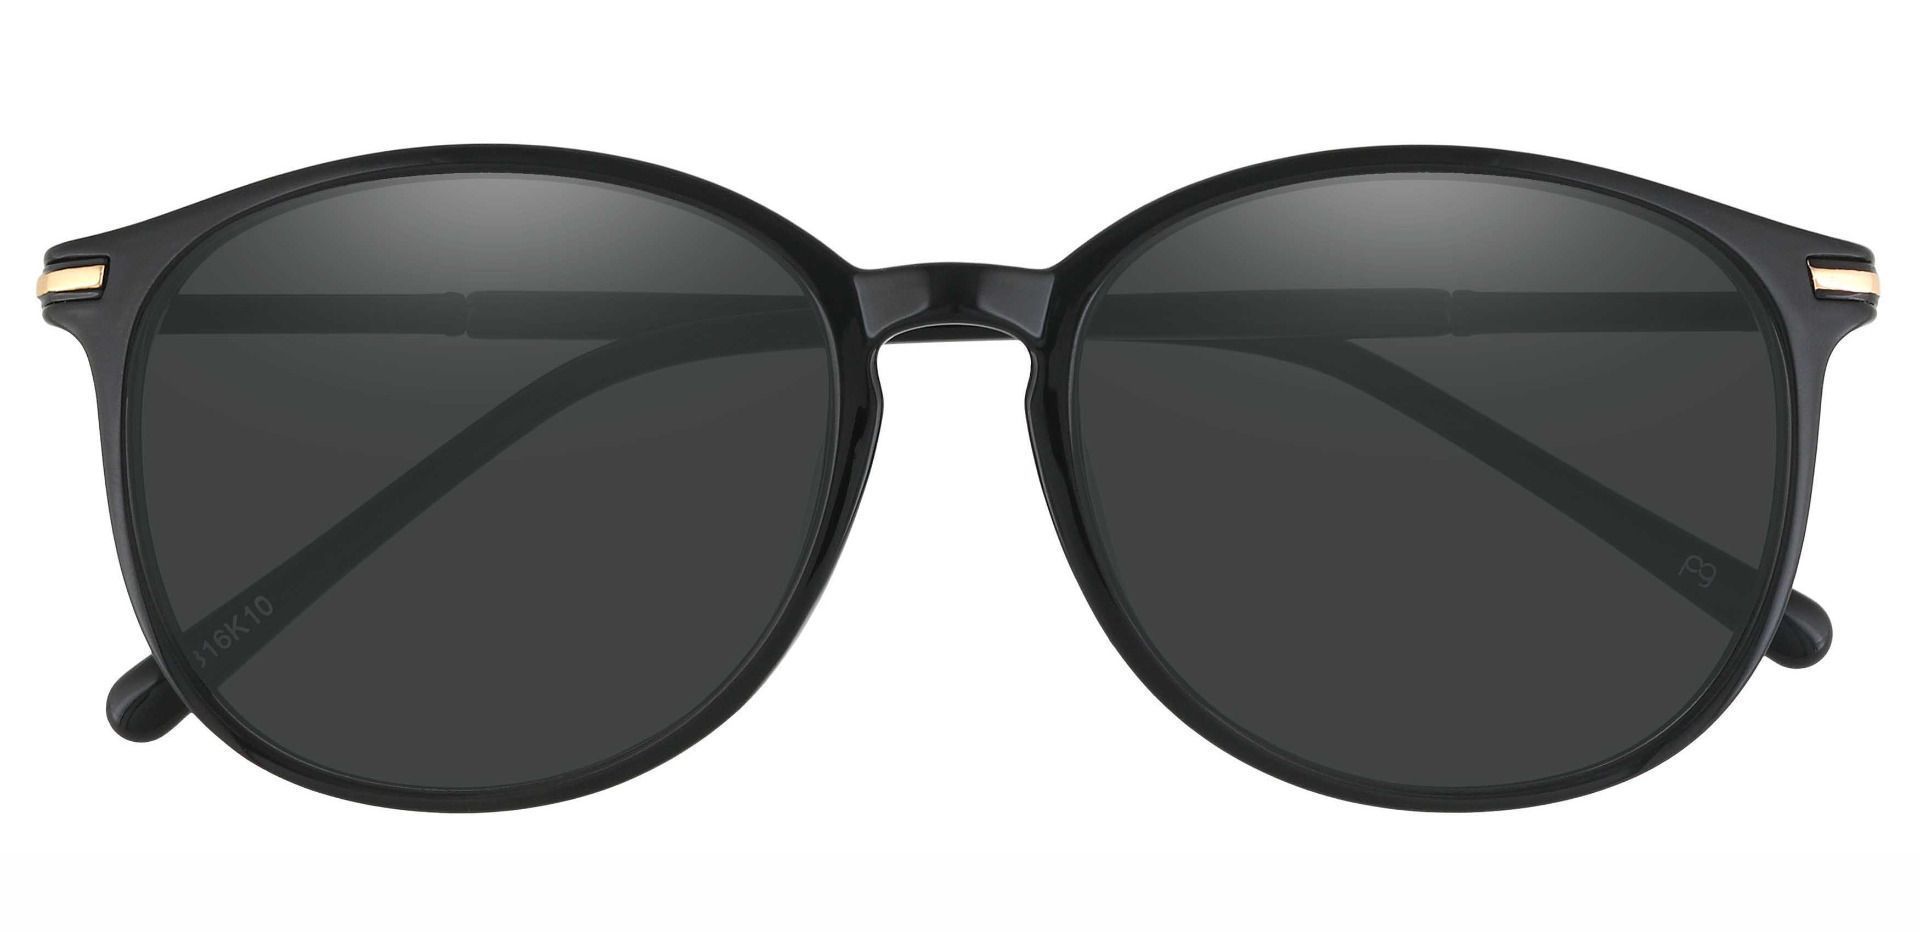 Danbury Oval Lined Bifocal Sunglasses - Black Frame With Gray Lenses